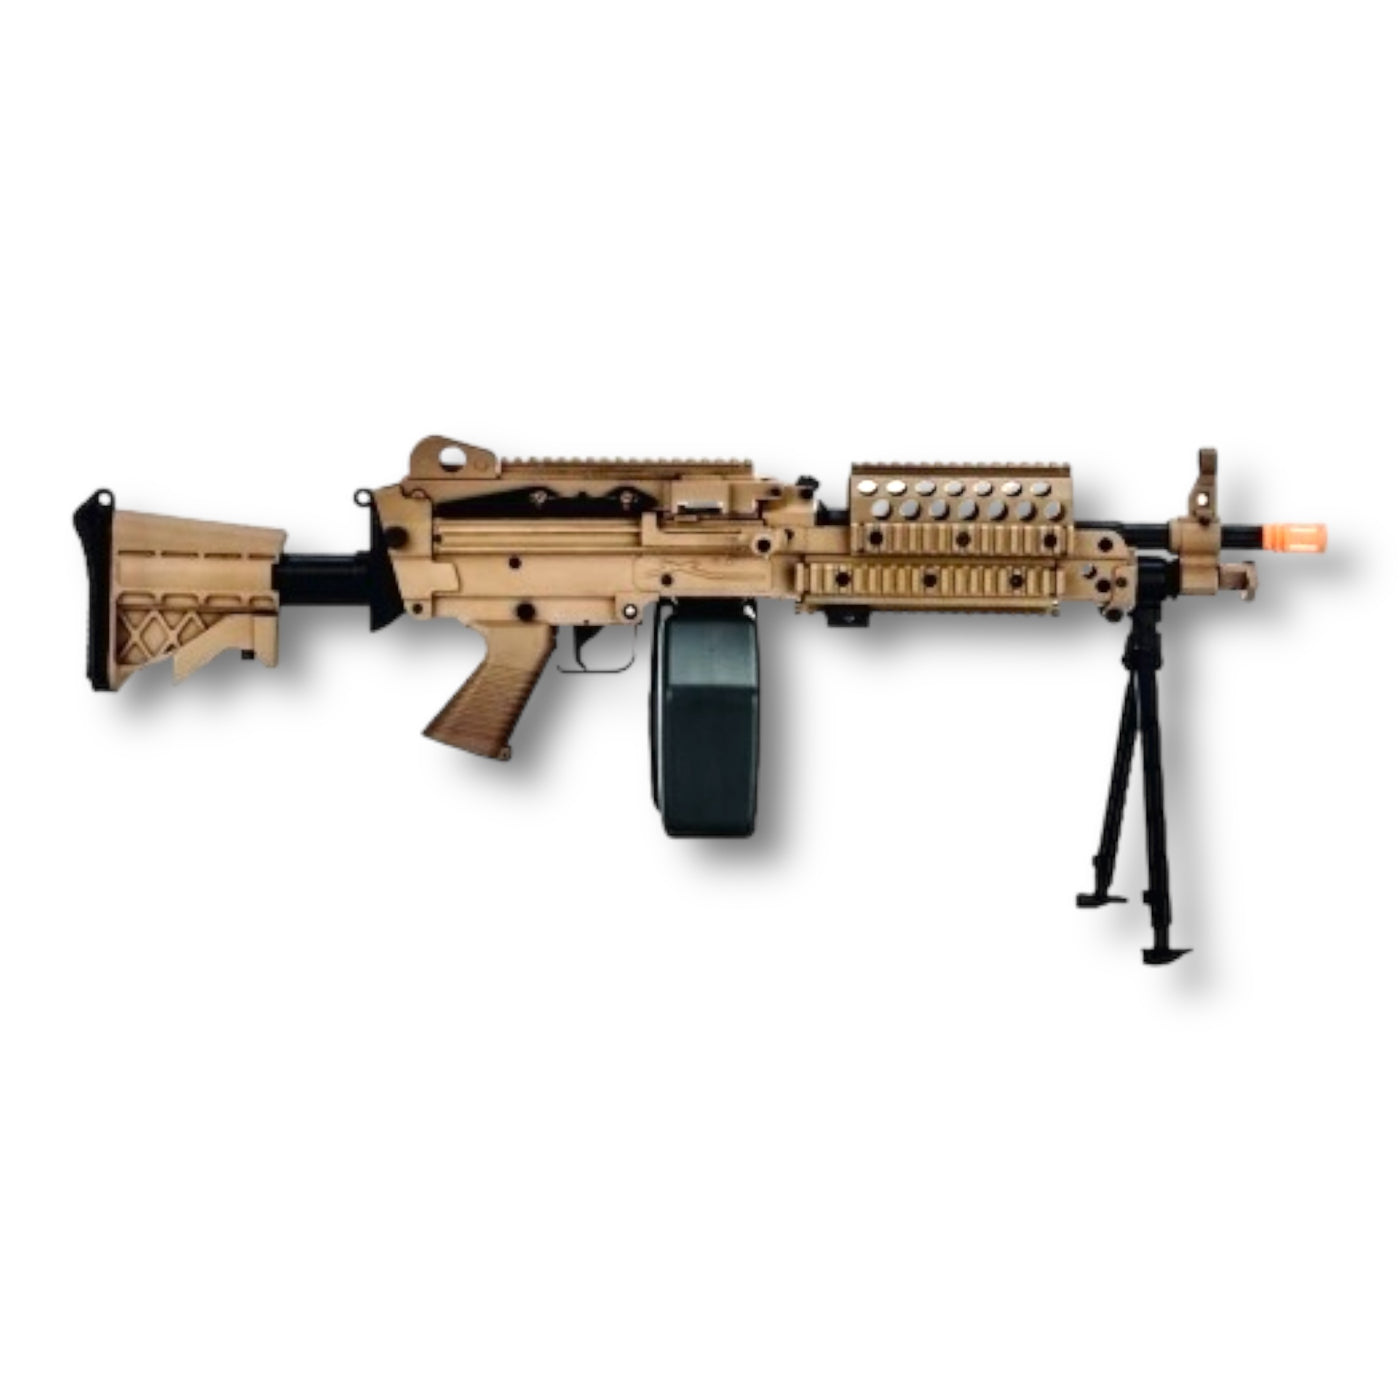 COLT M4 CQBR SOPMOD AEG Airsoft Rifle w/ Metal Gearbox by CYBERGUN